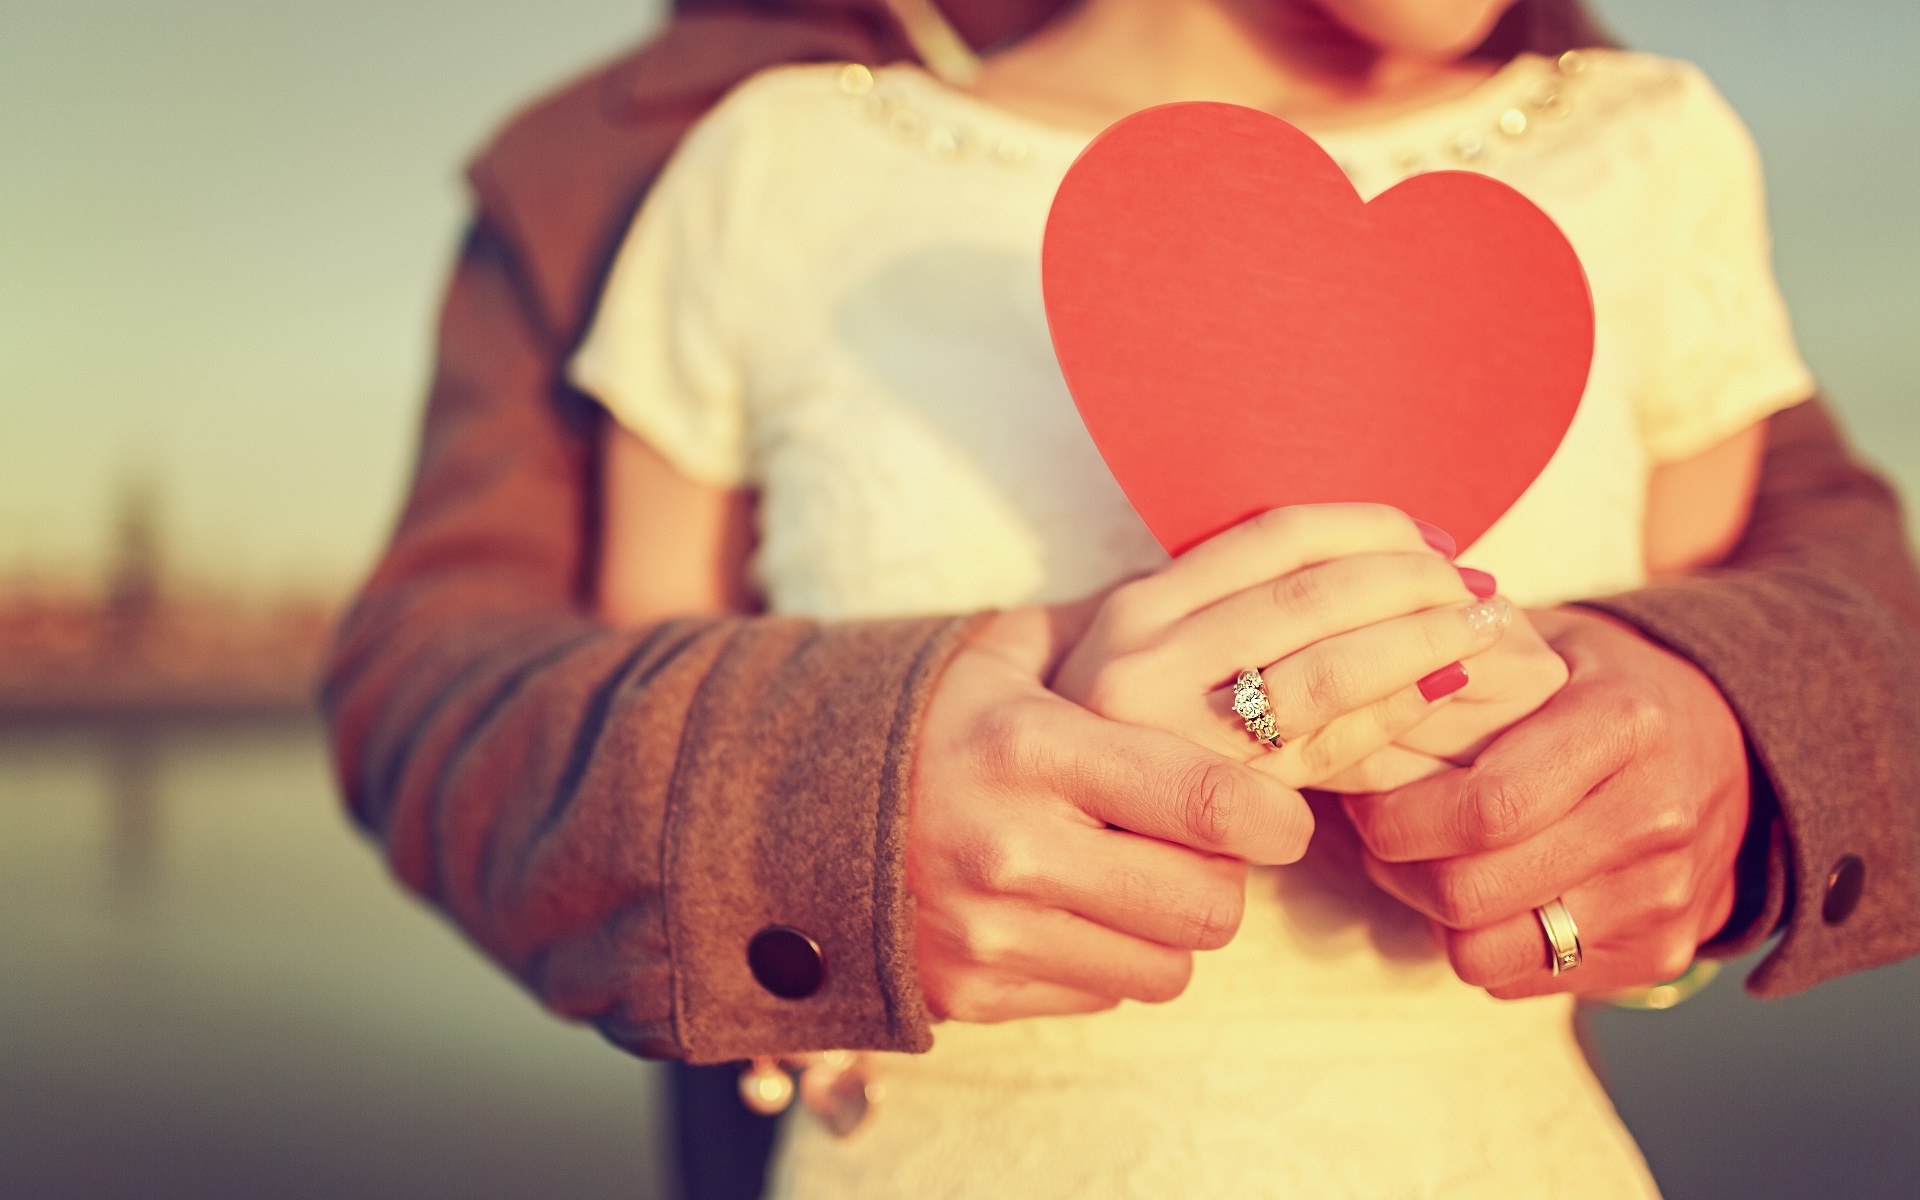 Couple love heart hands.jpg